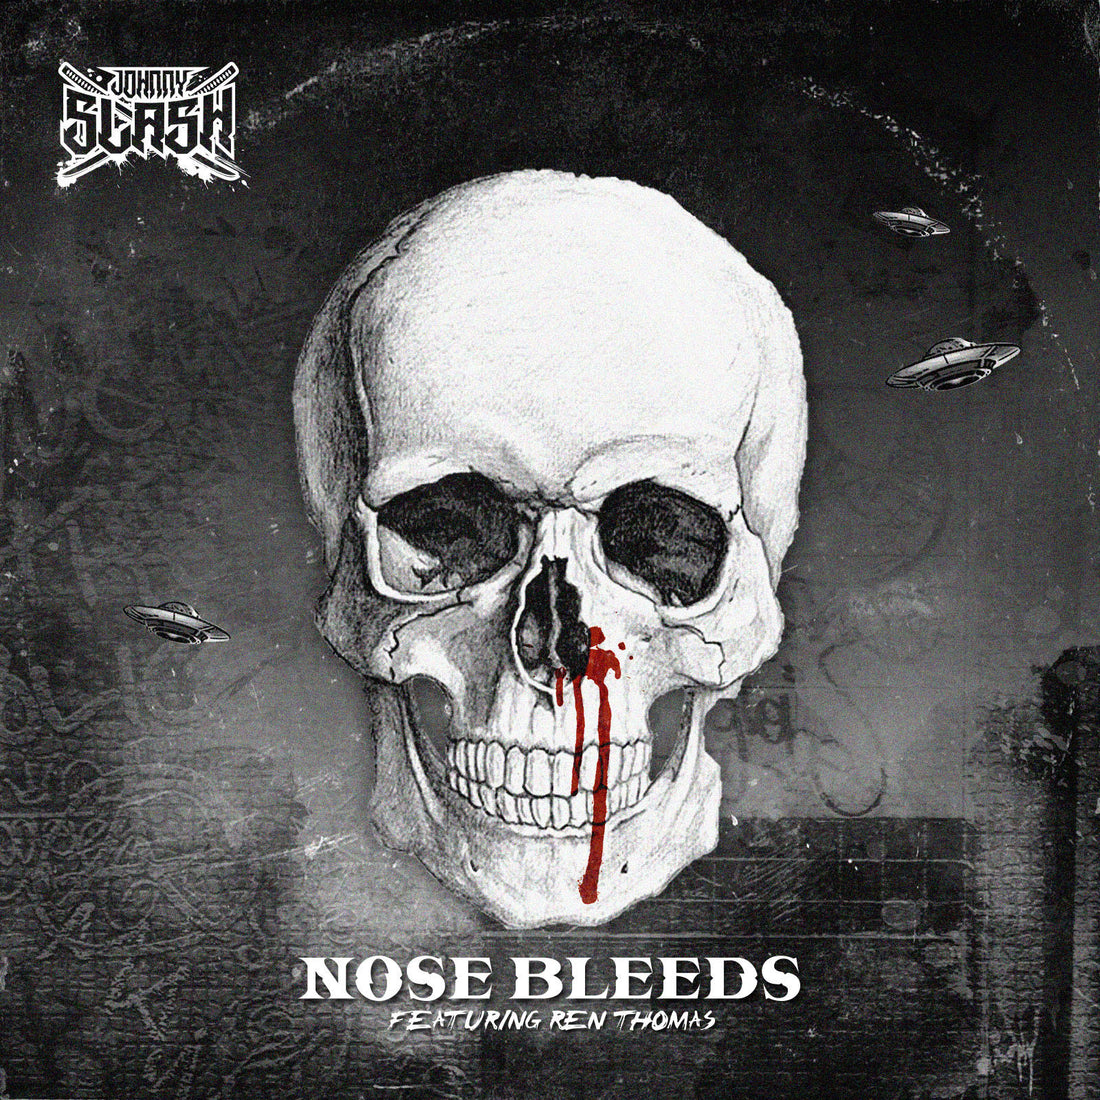 New Single: Johnny Slash "Nose Bleeds" feat. Ren Thomas